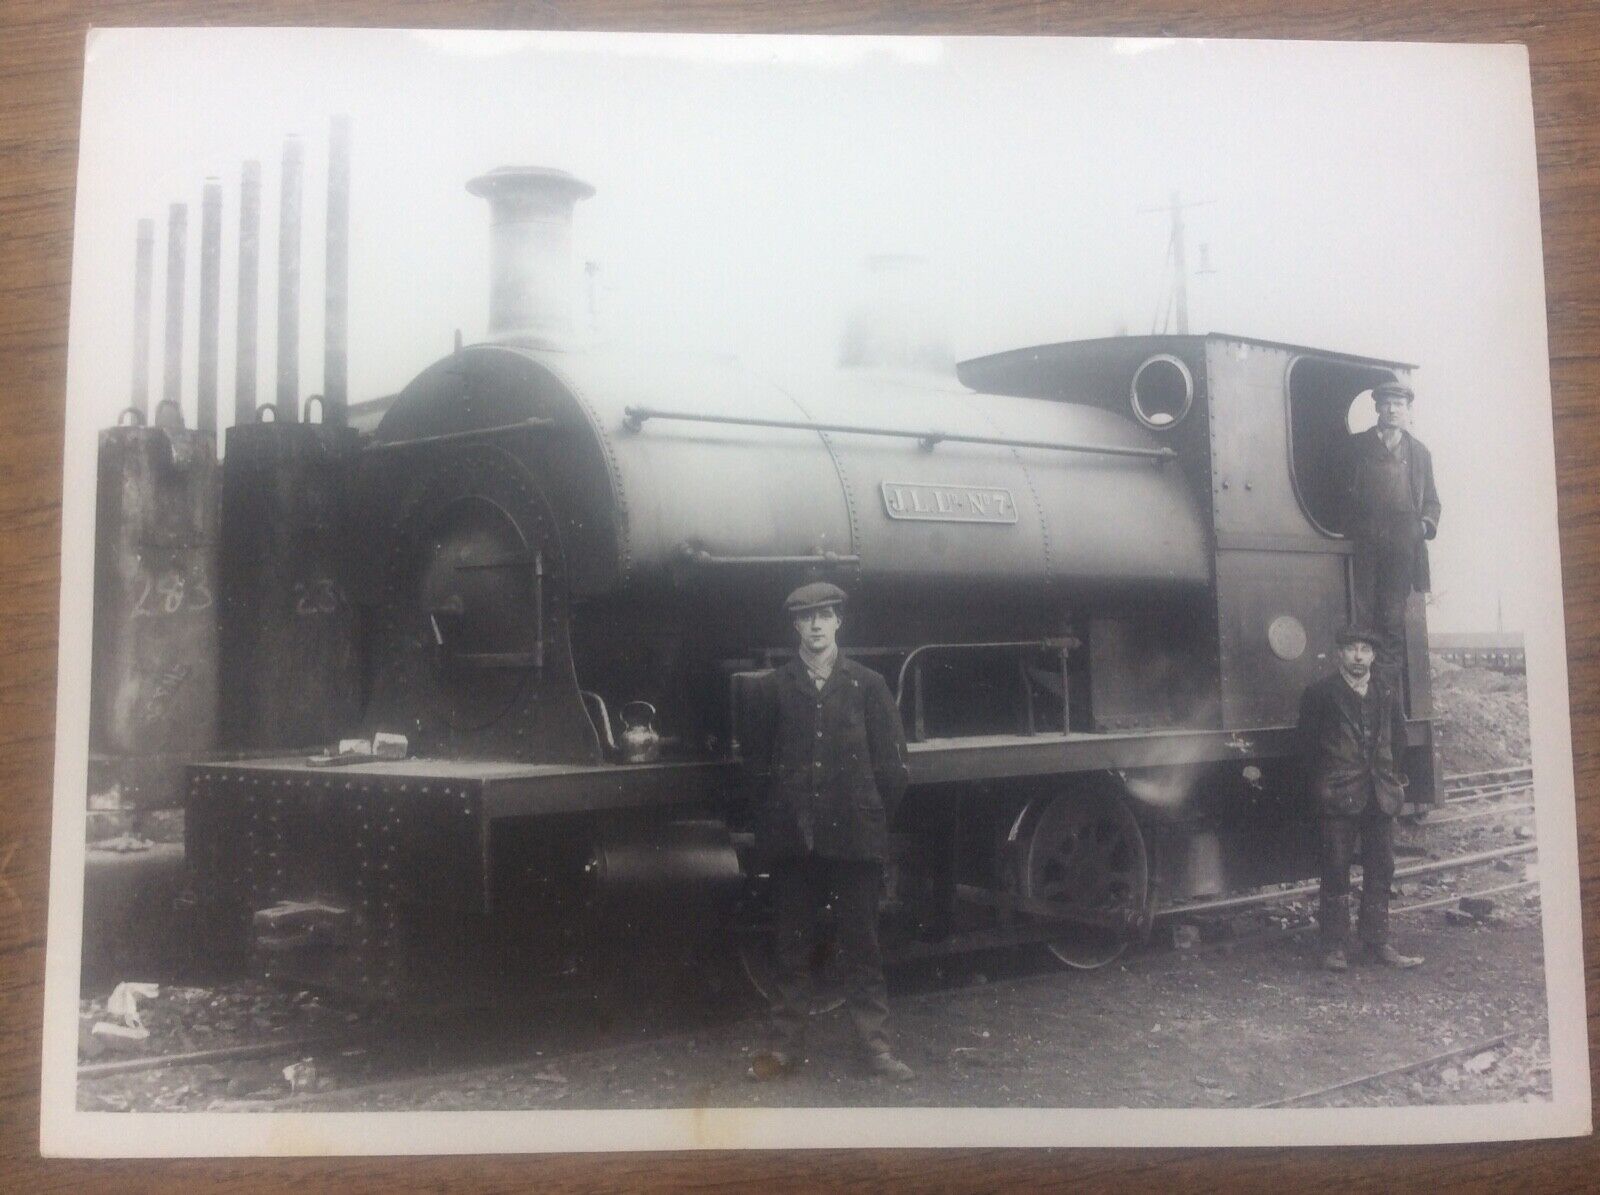 Scunthorpe British Steel Industrial Photograph Print Railway JL Ltd 7 Loco 8x6”